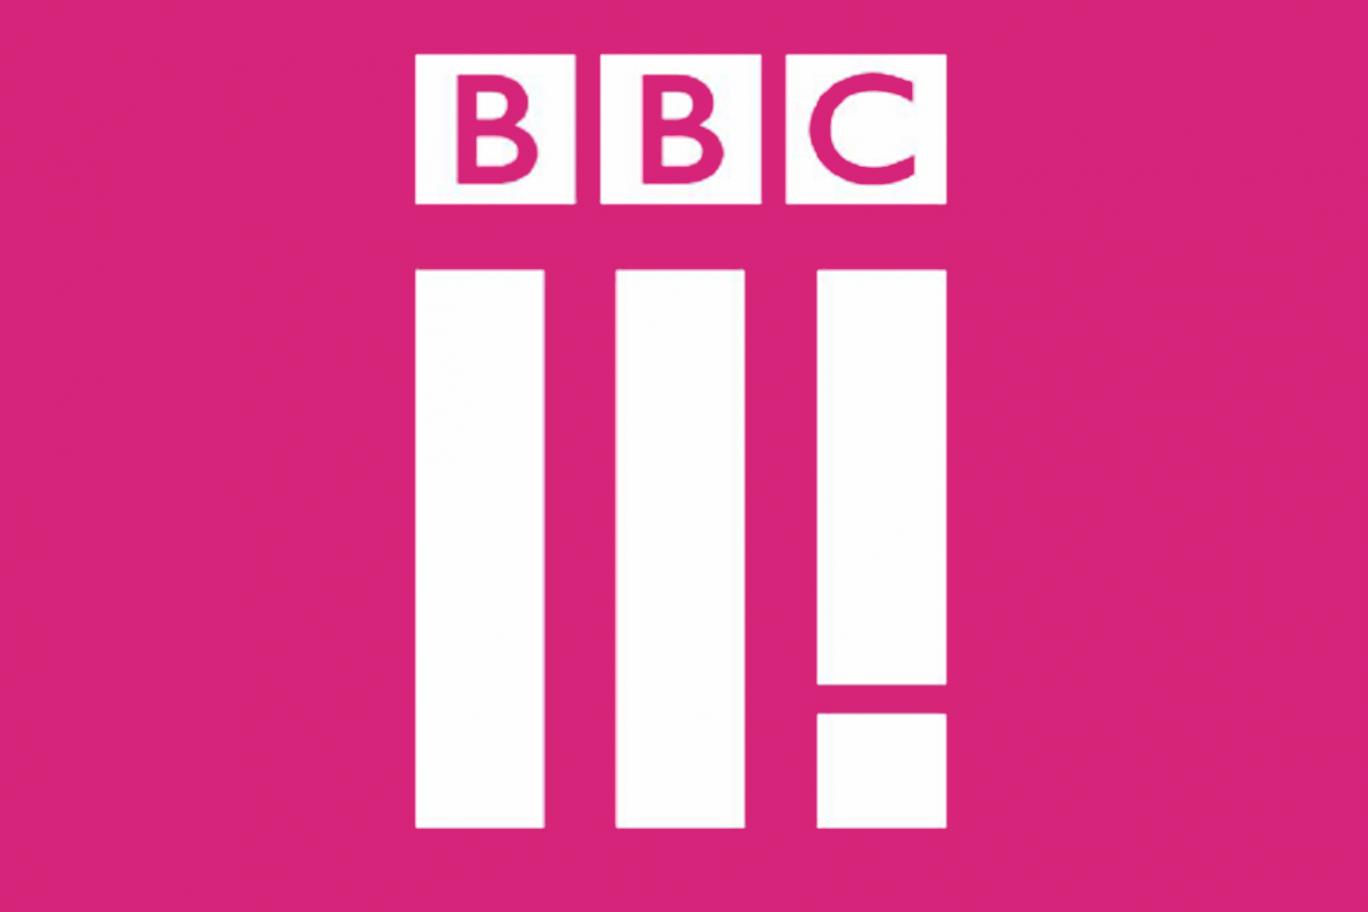 The new BBC3